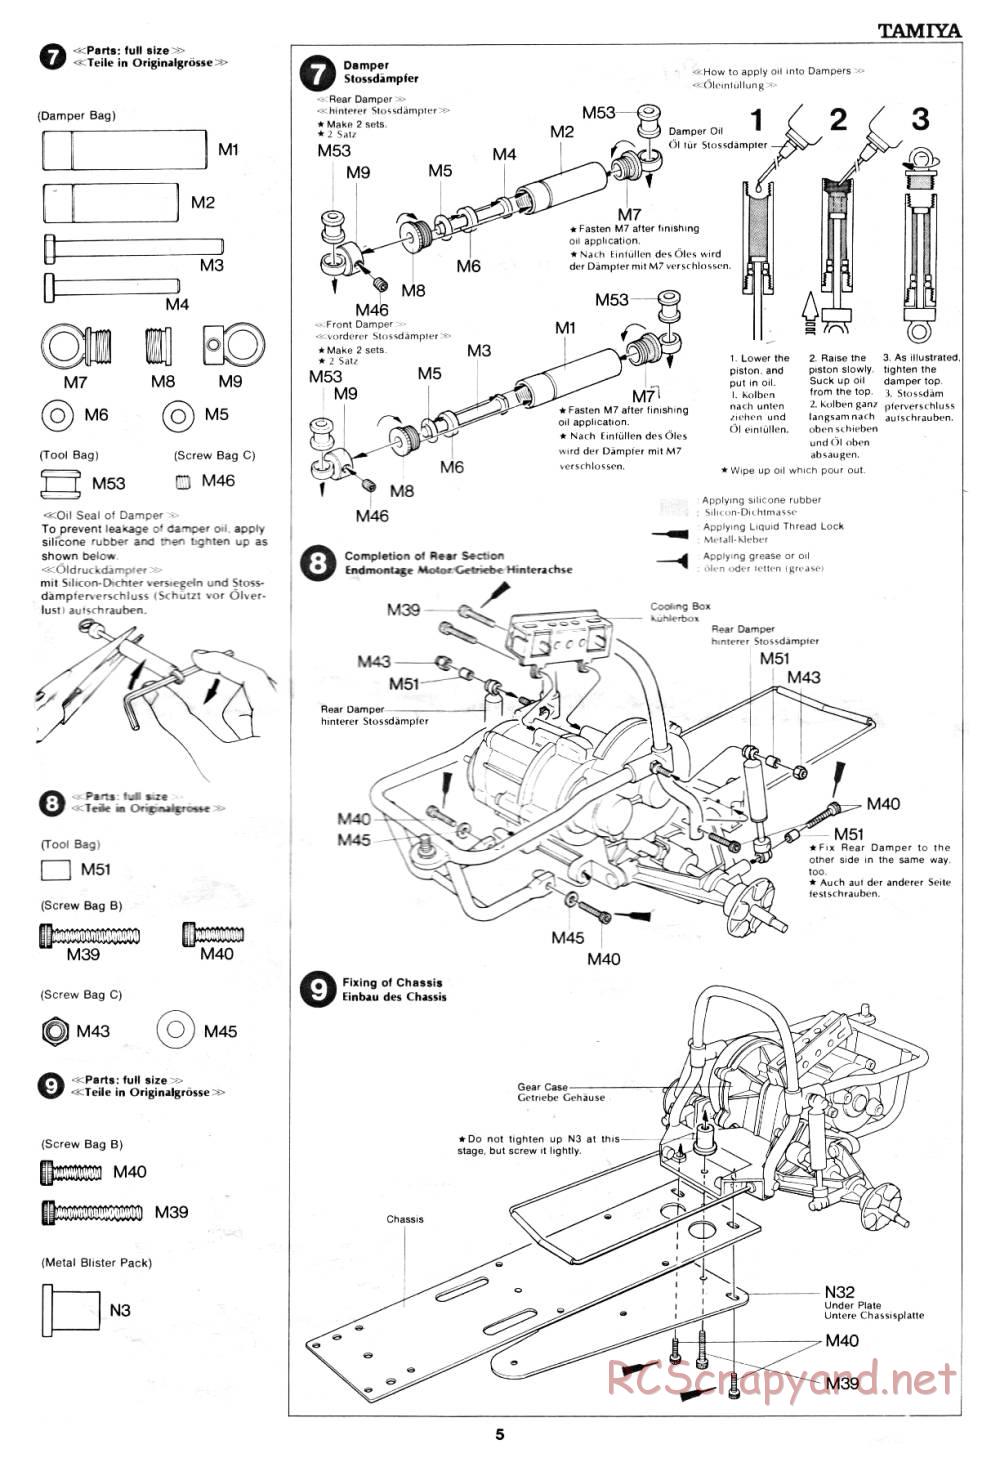 Tamiya - Sand Scorcher - 58016 - Manual - Page 5